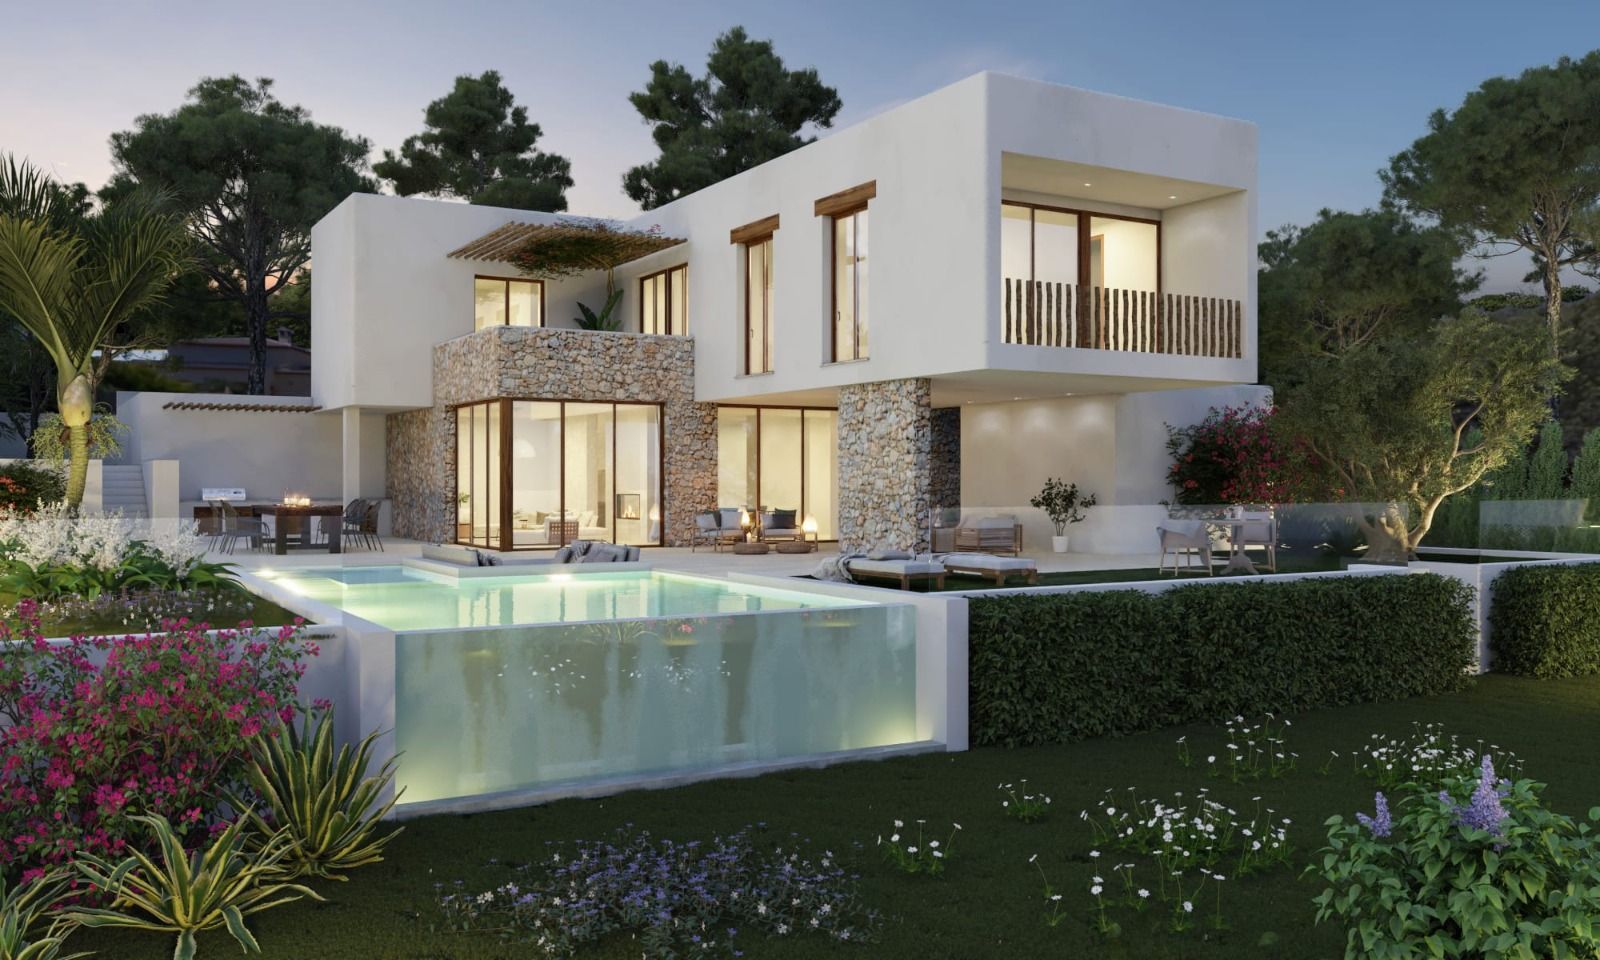 Villa neuve de style Ibiza à vendre à Las Laderas Jávea, Costa Blanca